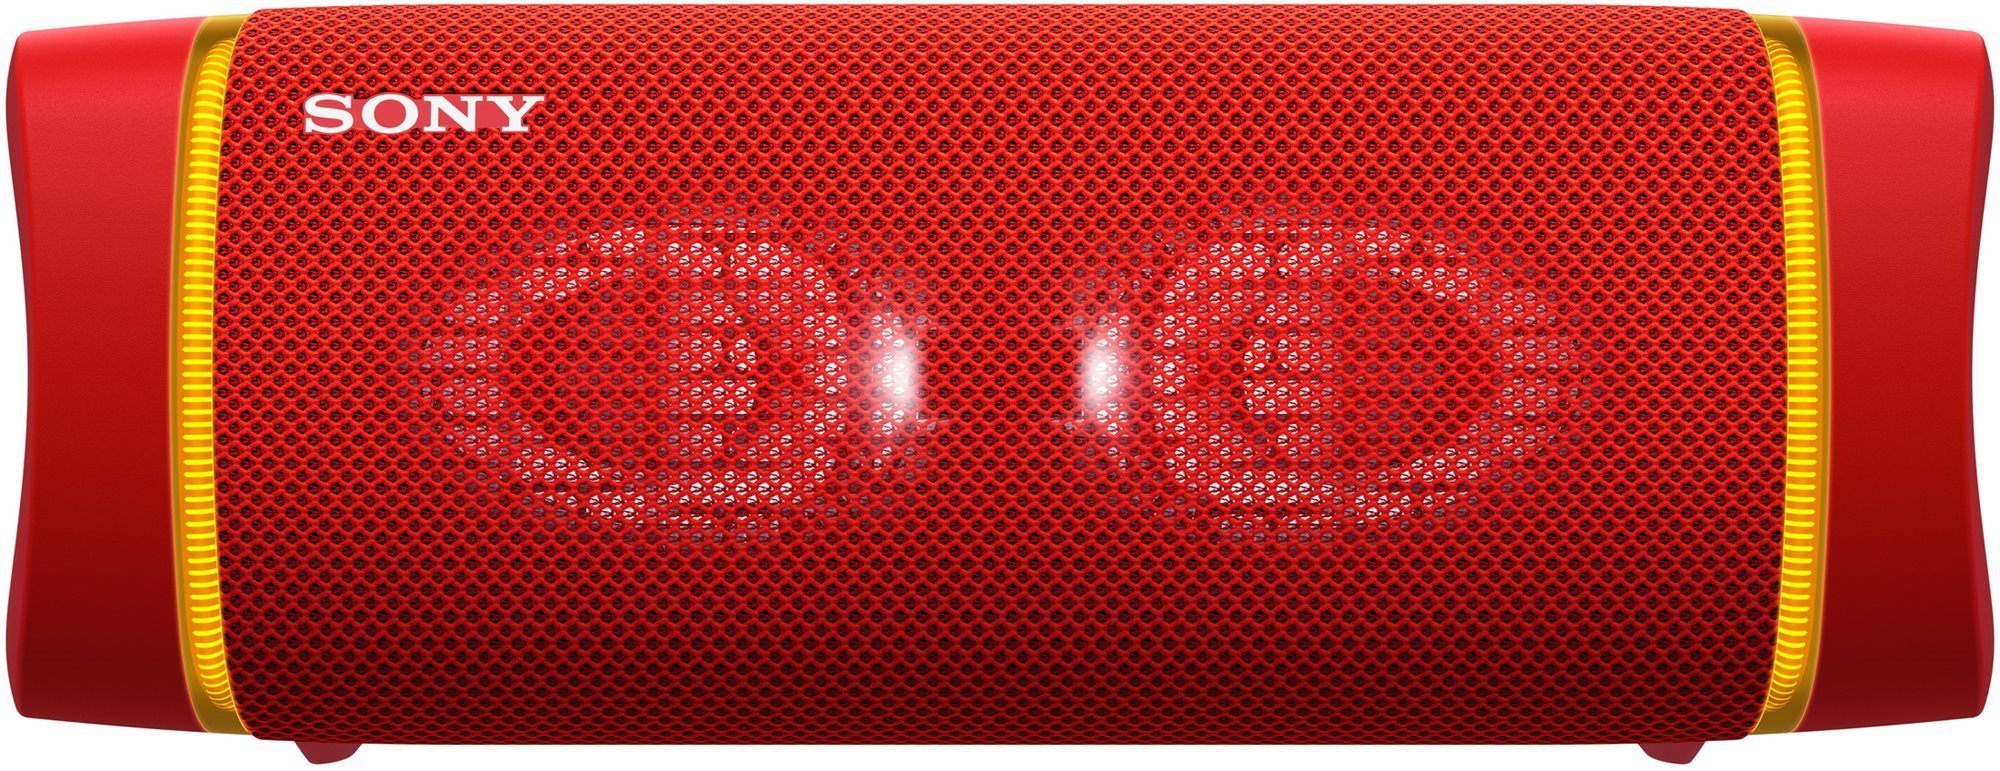 Bluetooth Speaker Sony SRS-XB33, Red Screen